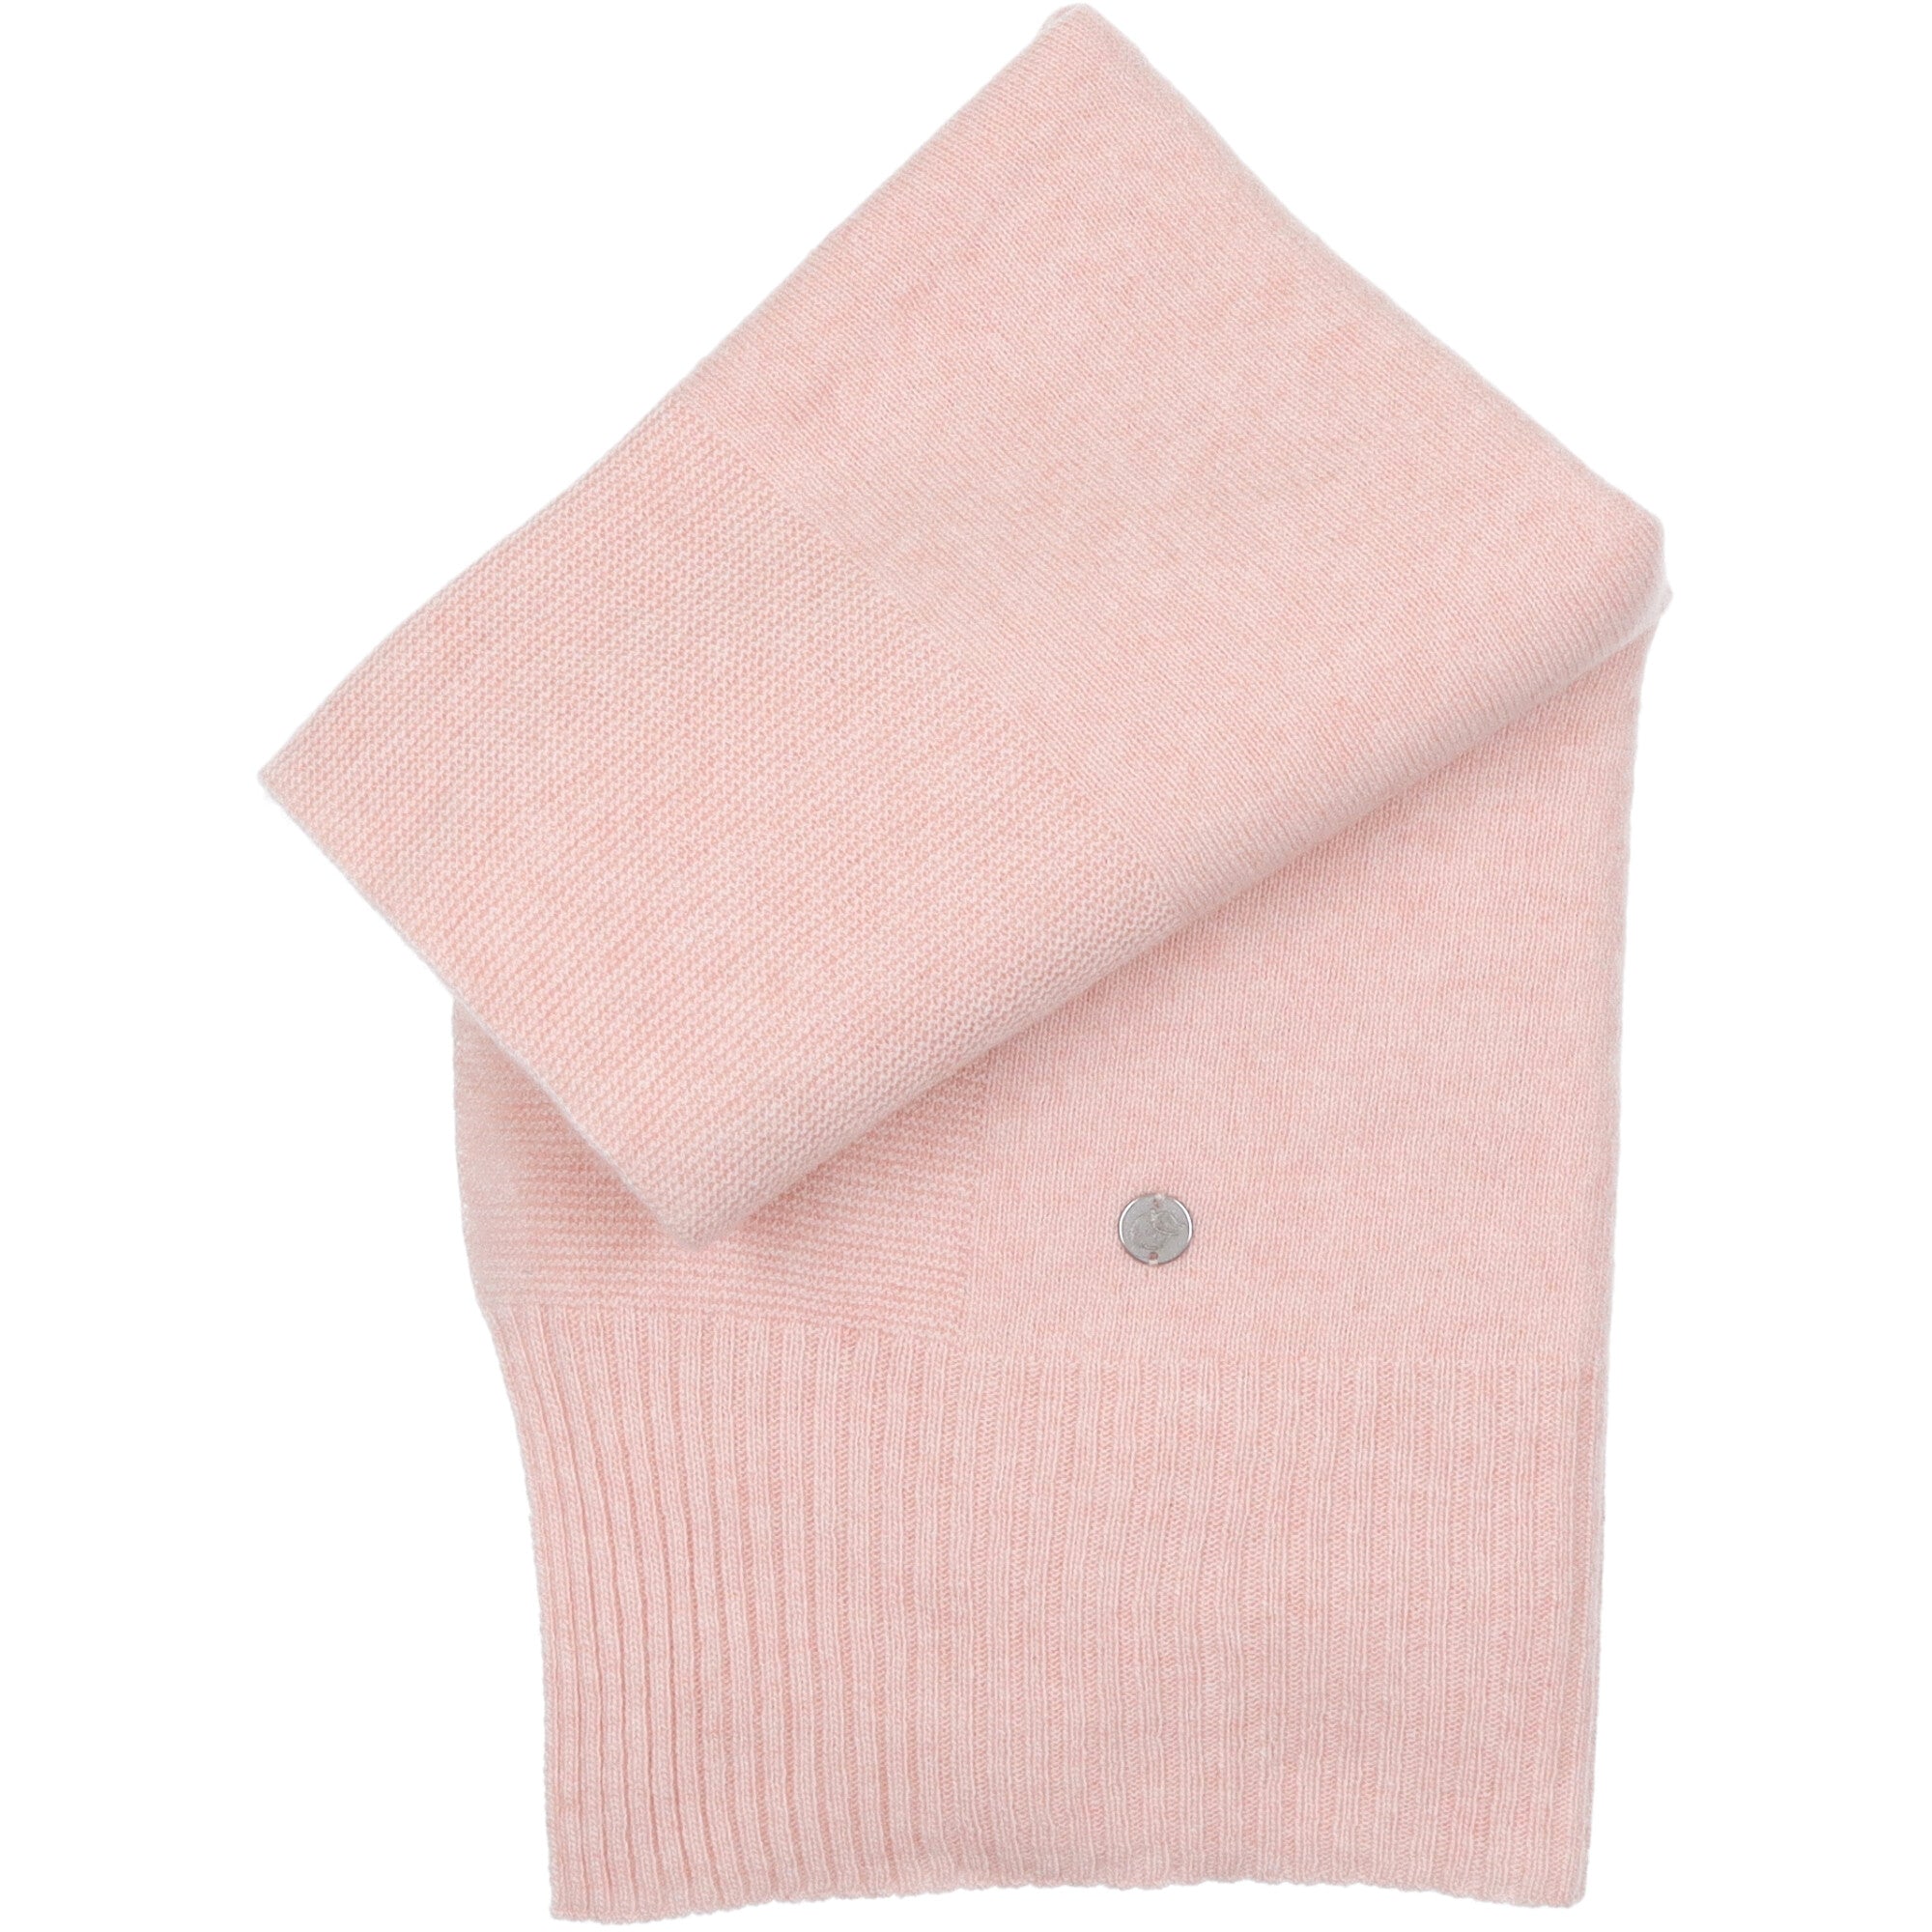 coperta-in-lana-colore-rosa-pesco-leggera